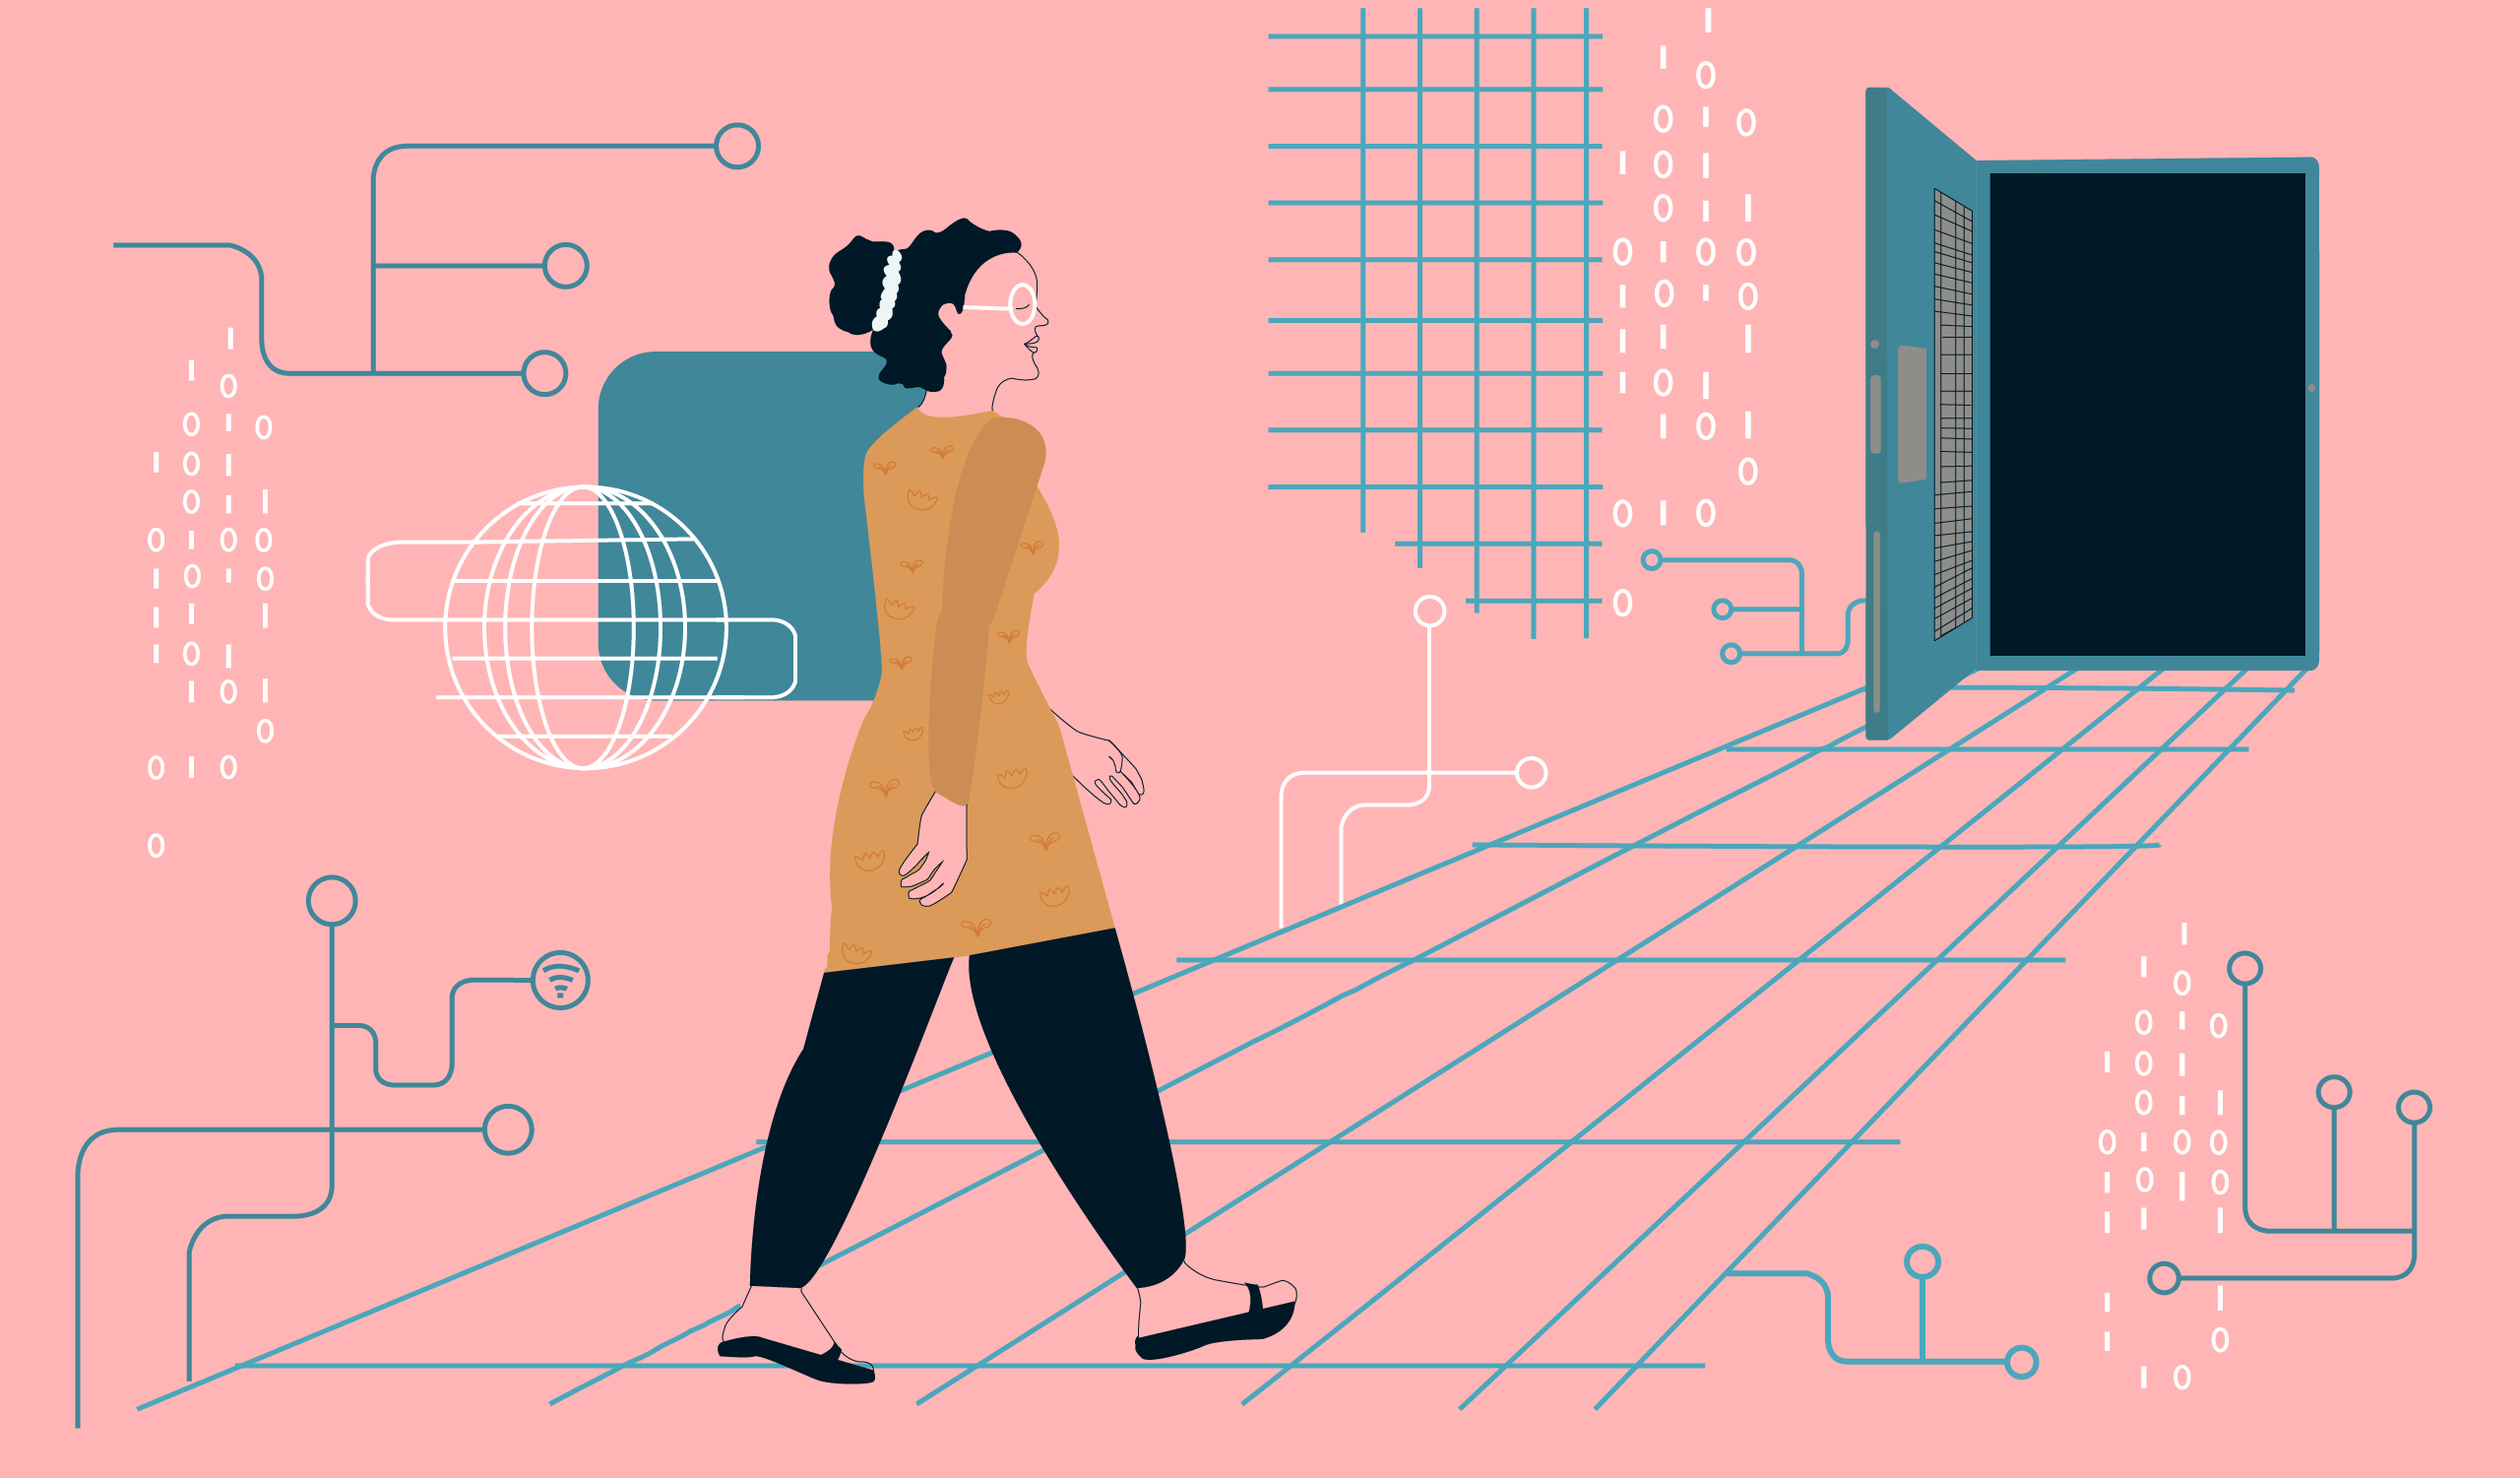 an illustration of a woman engineer walking towards an open door